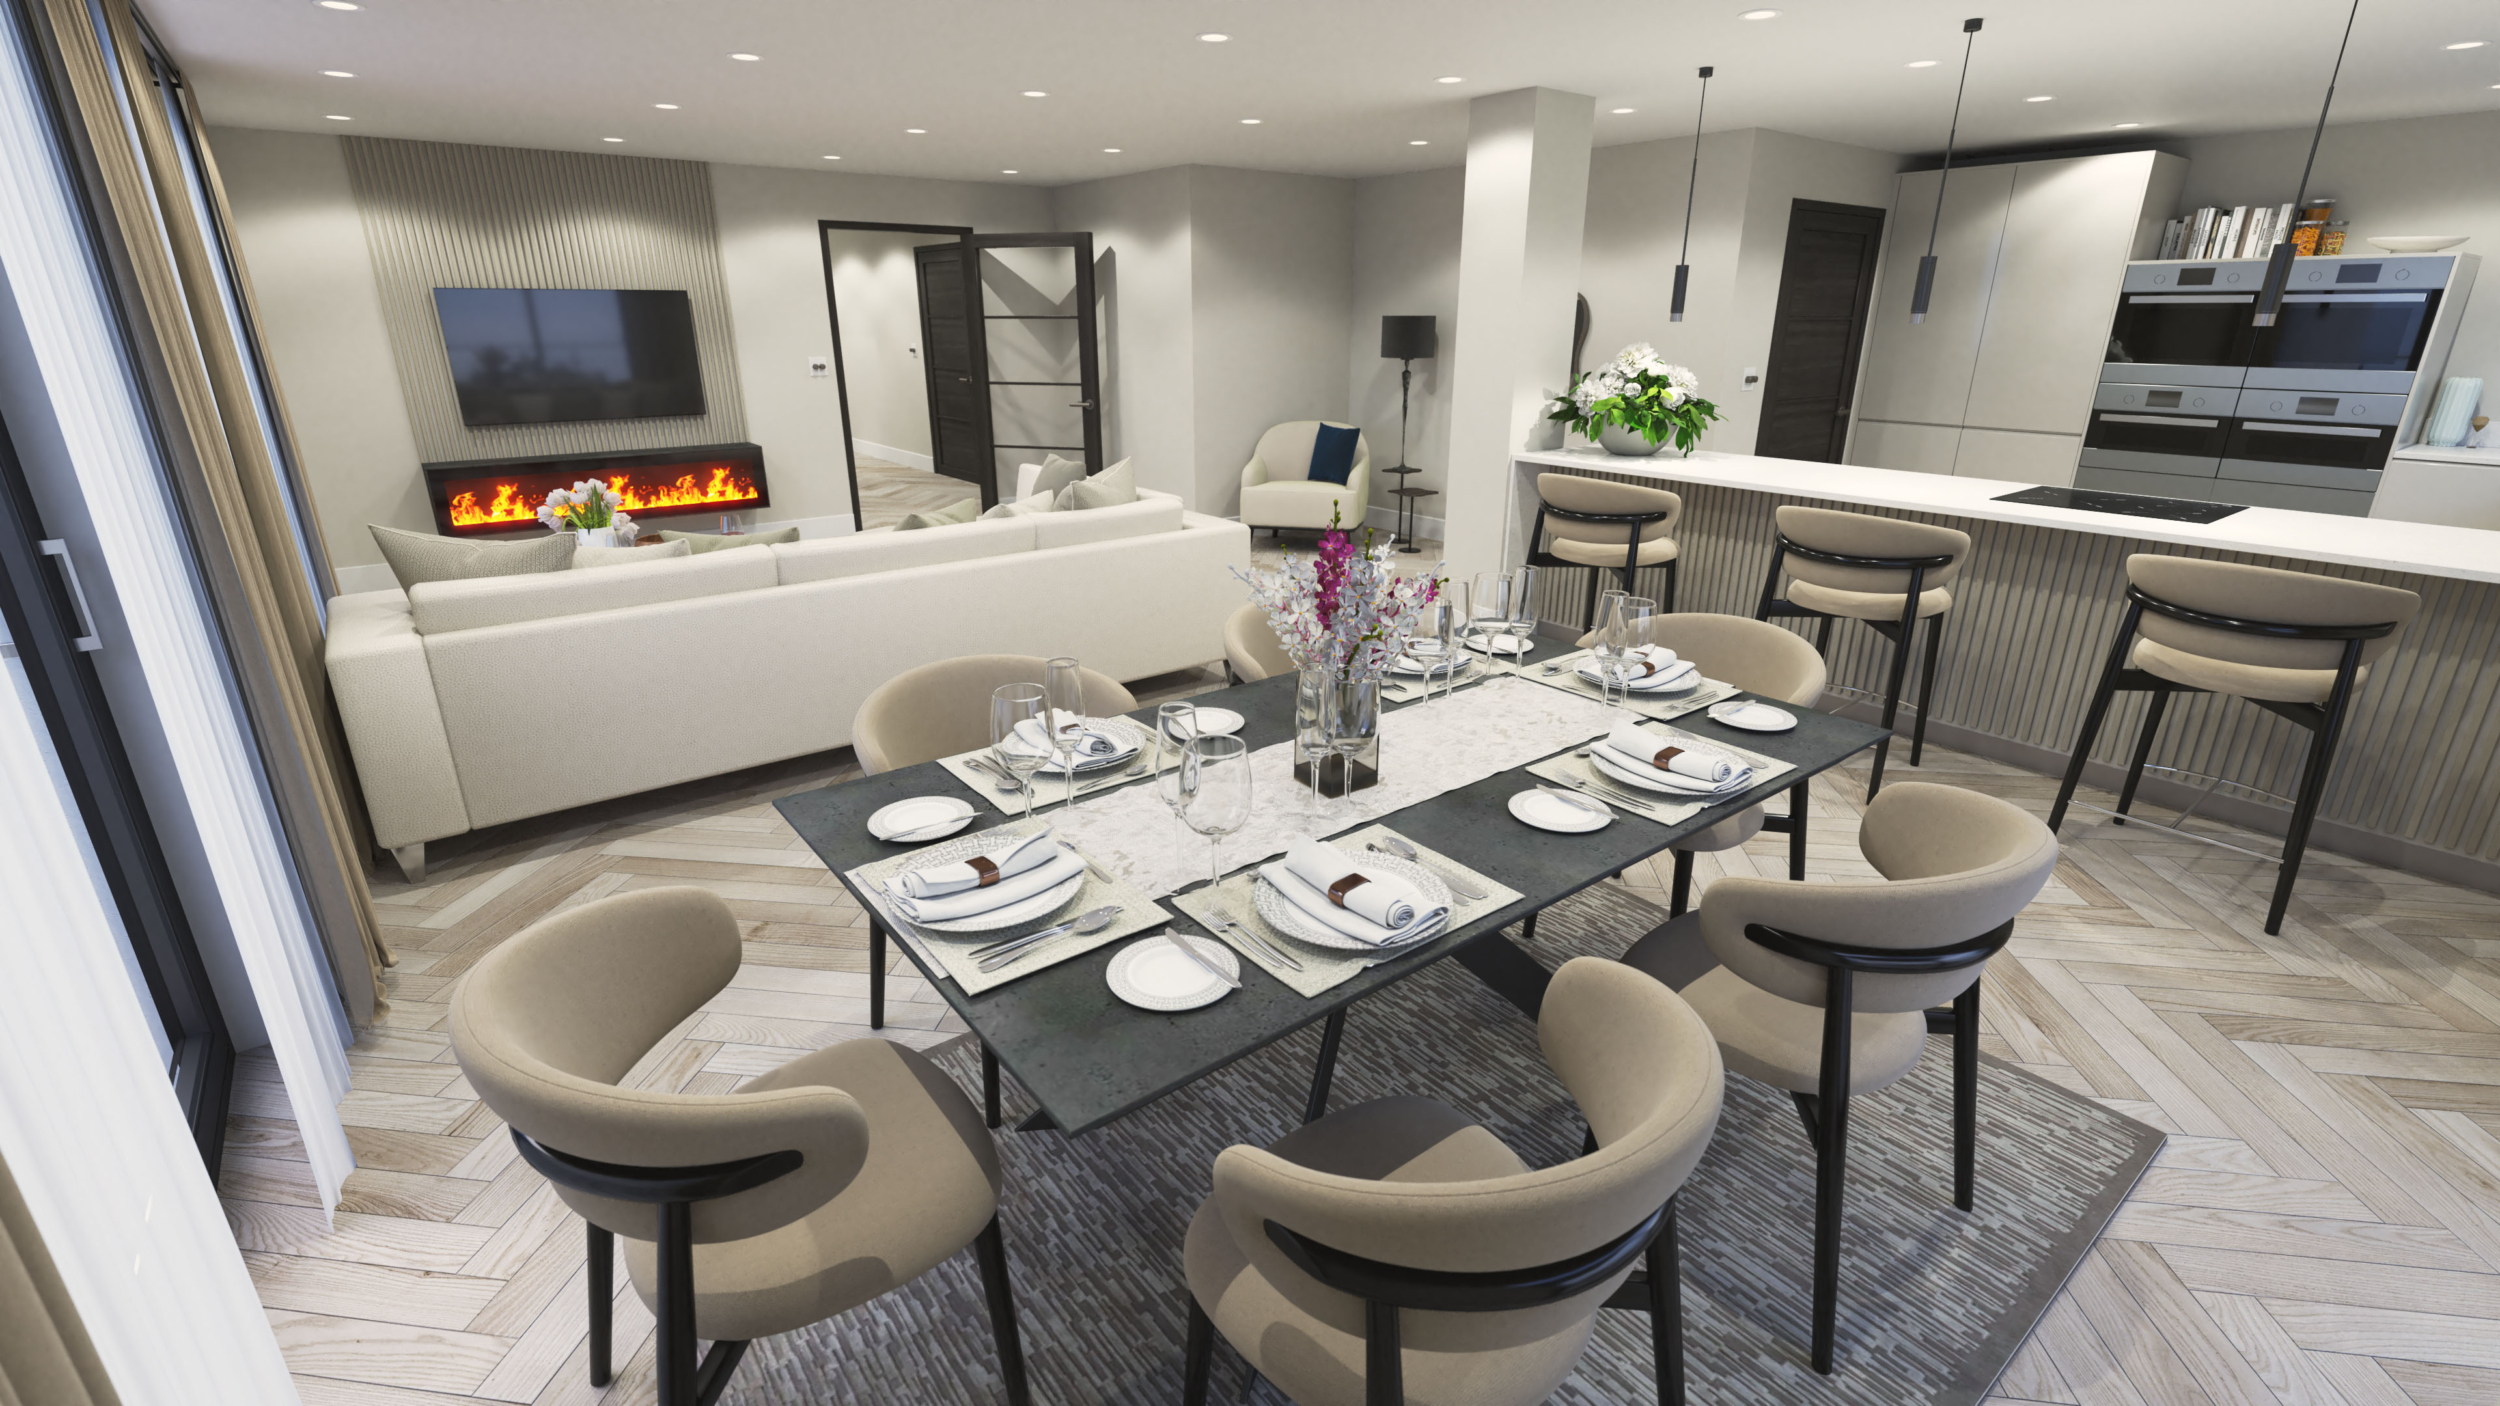 Luxury Penthouse Apartment, Dining Room CGI, Linear CGI Studio